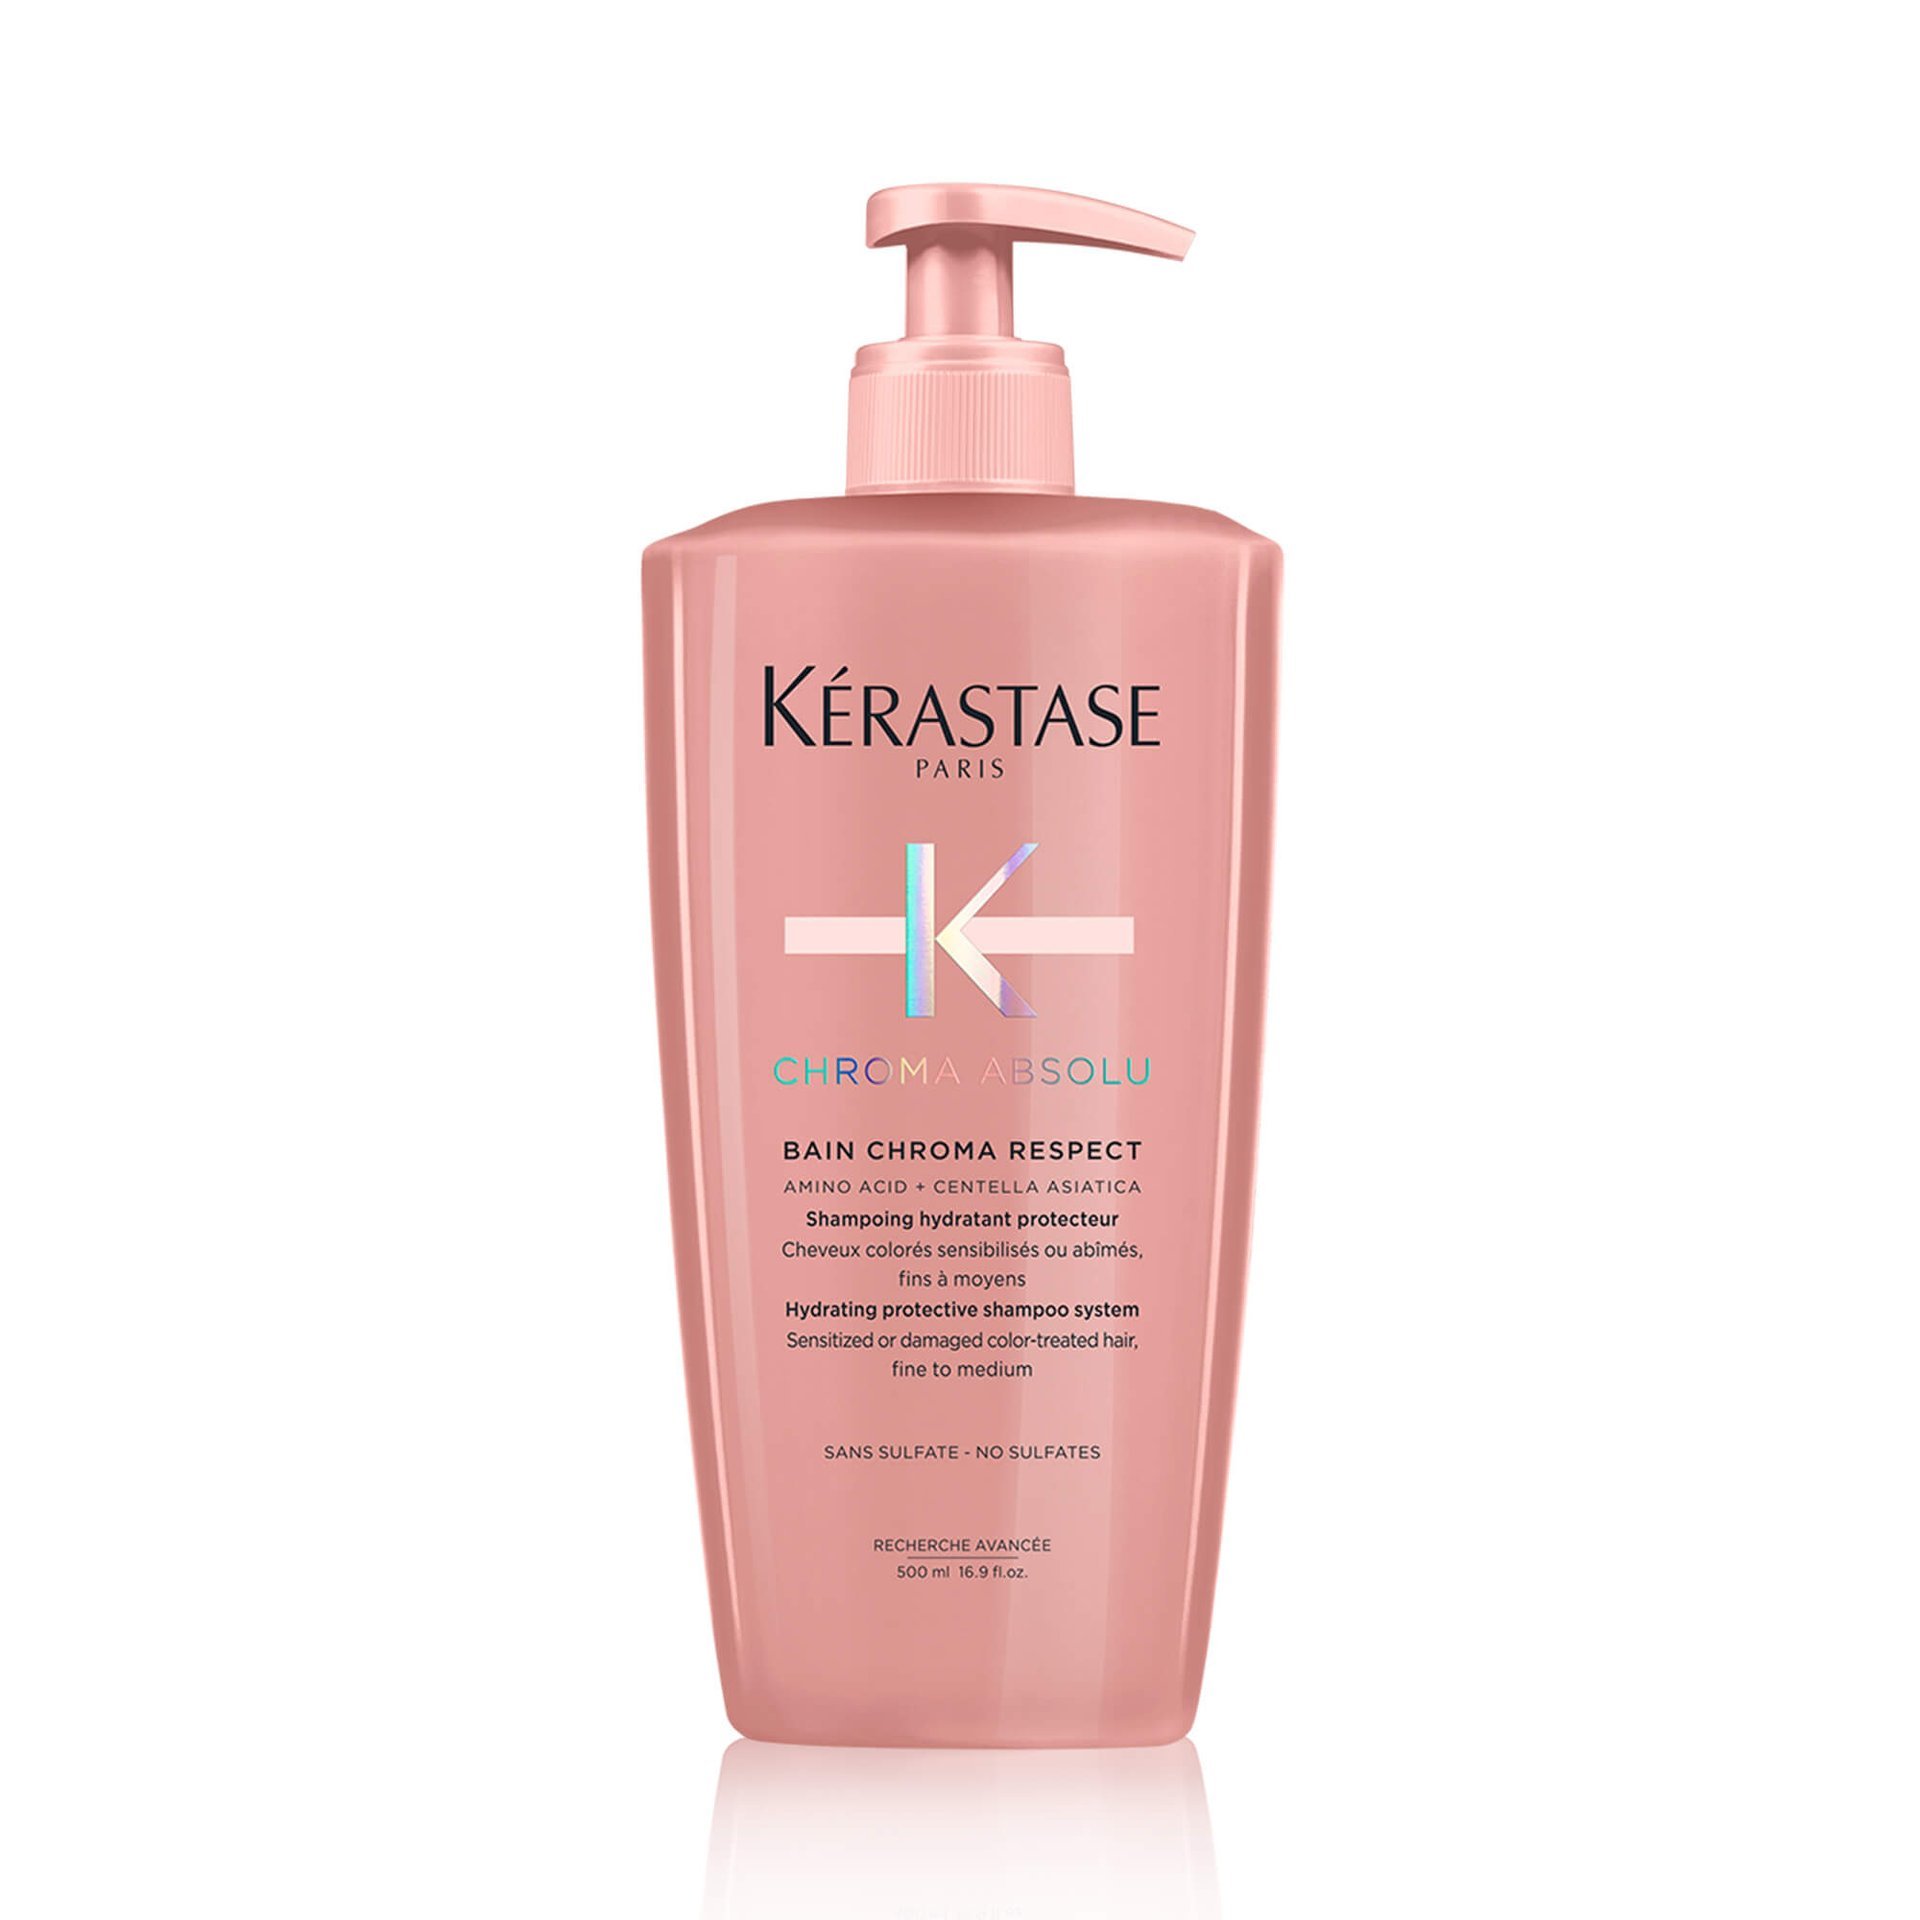 products - ケラスターゼ公式サイト KERASTASE PARIS